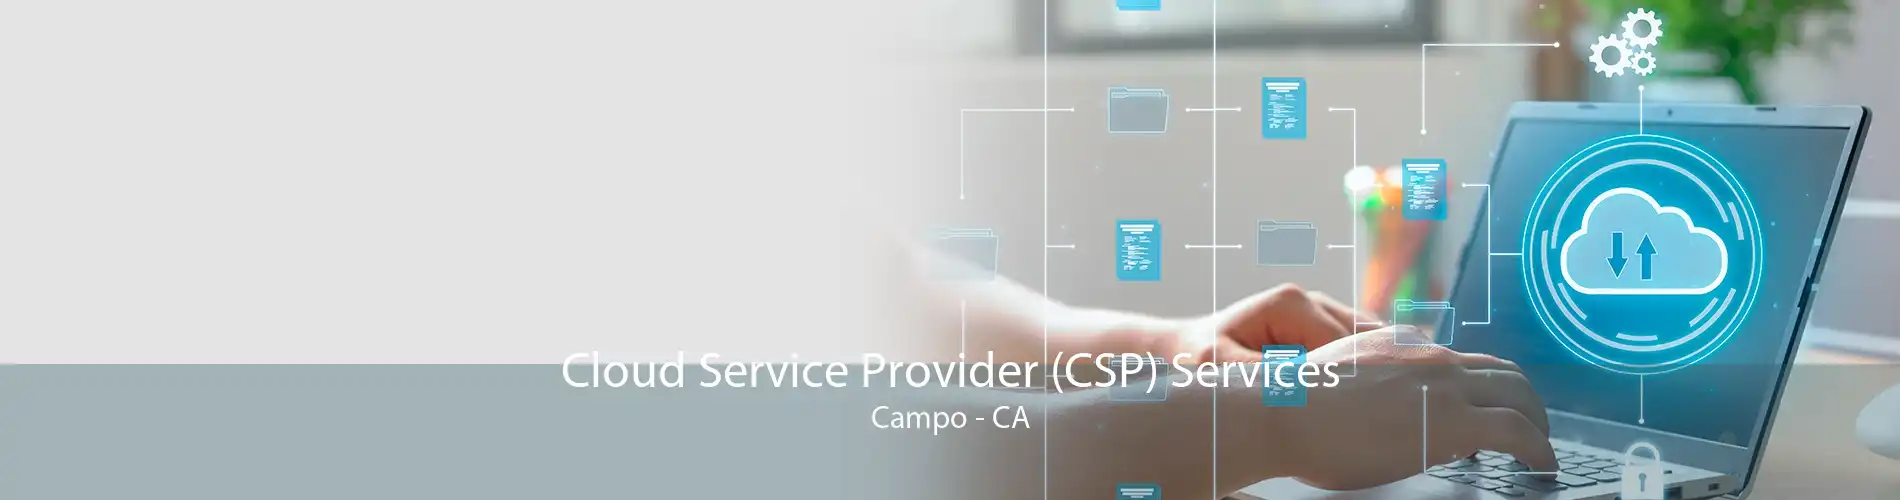 Cloud Service Provider (CSP) Services Campo - CA